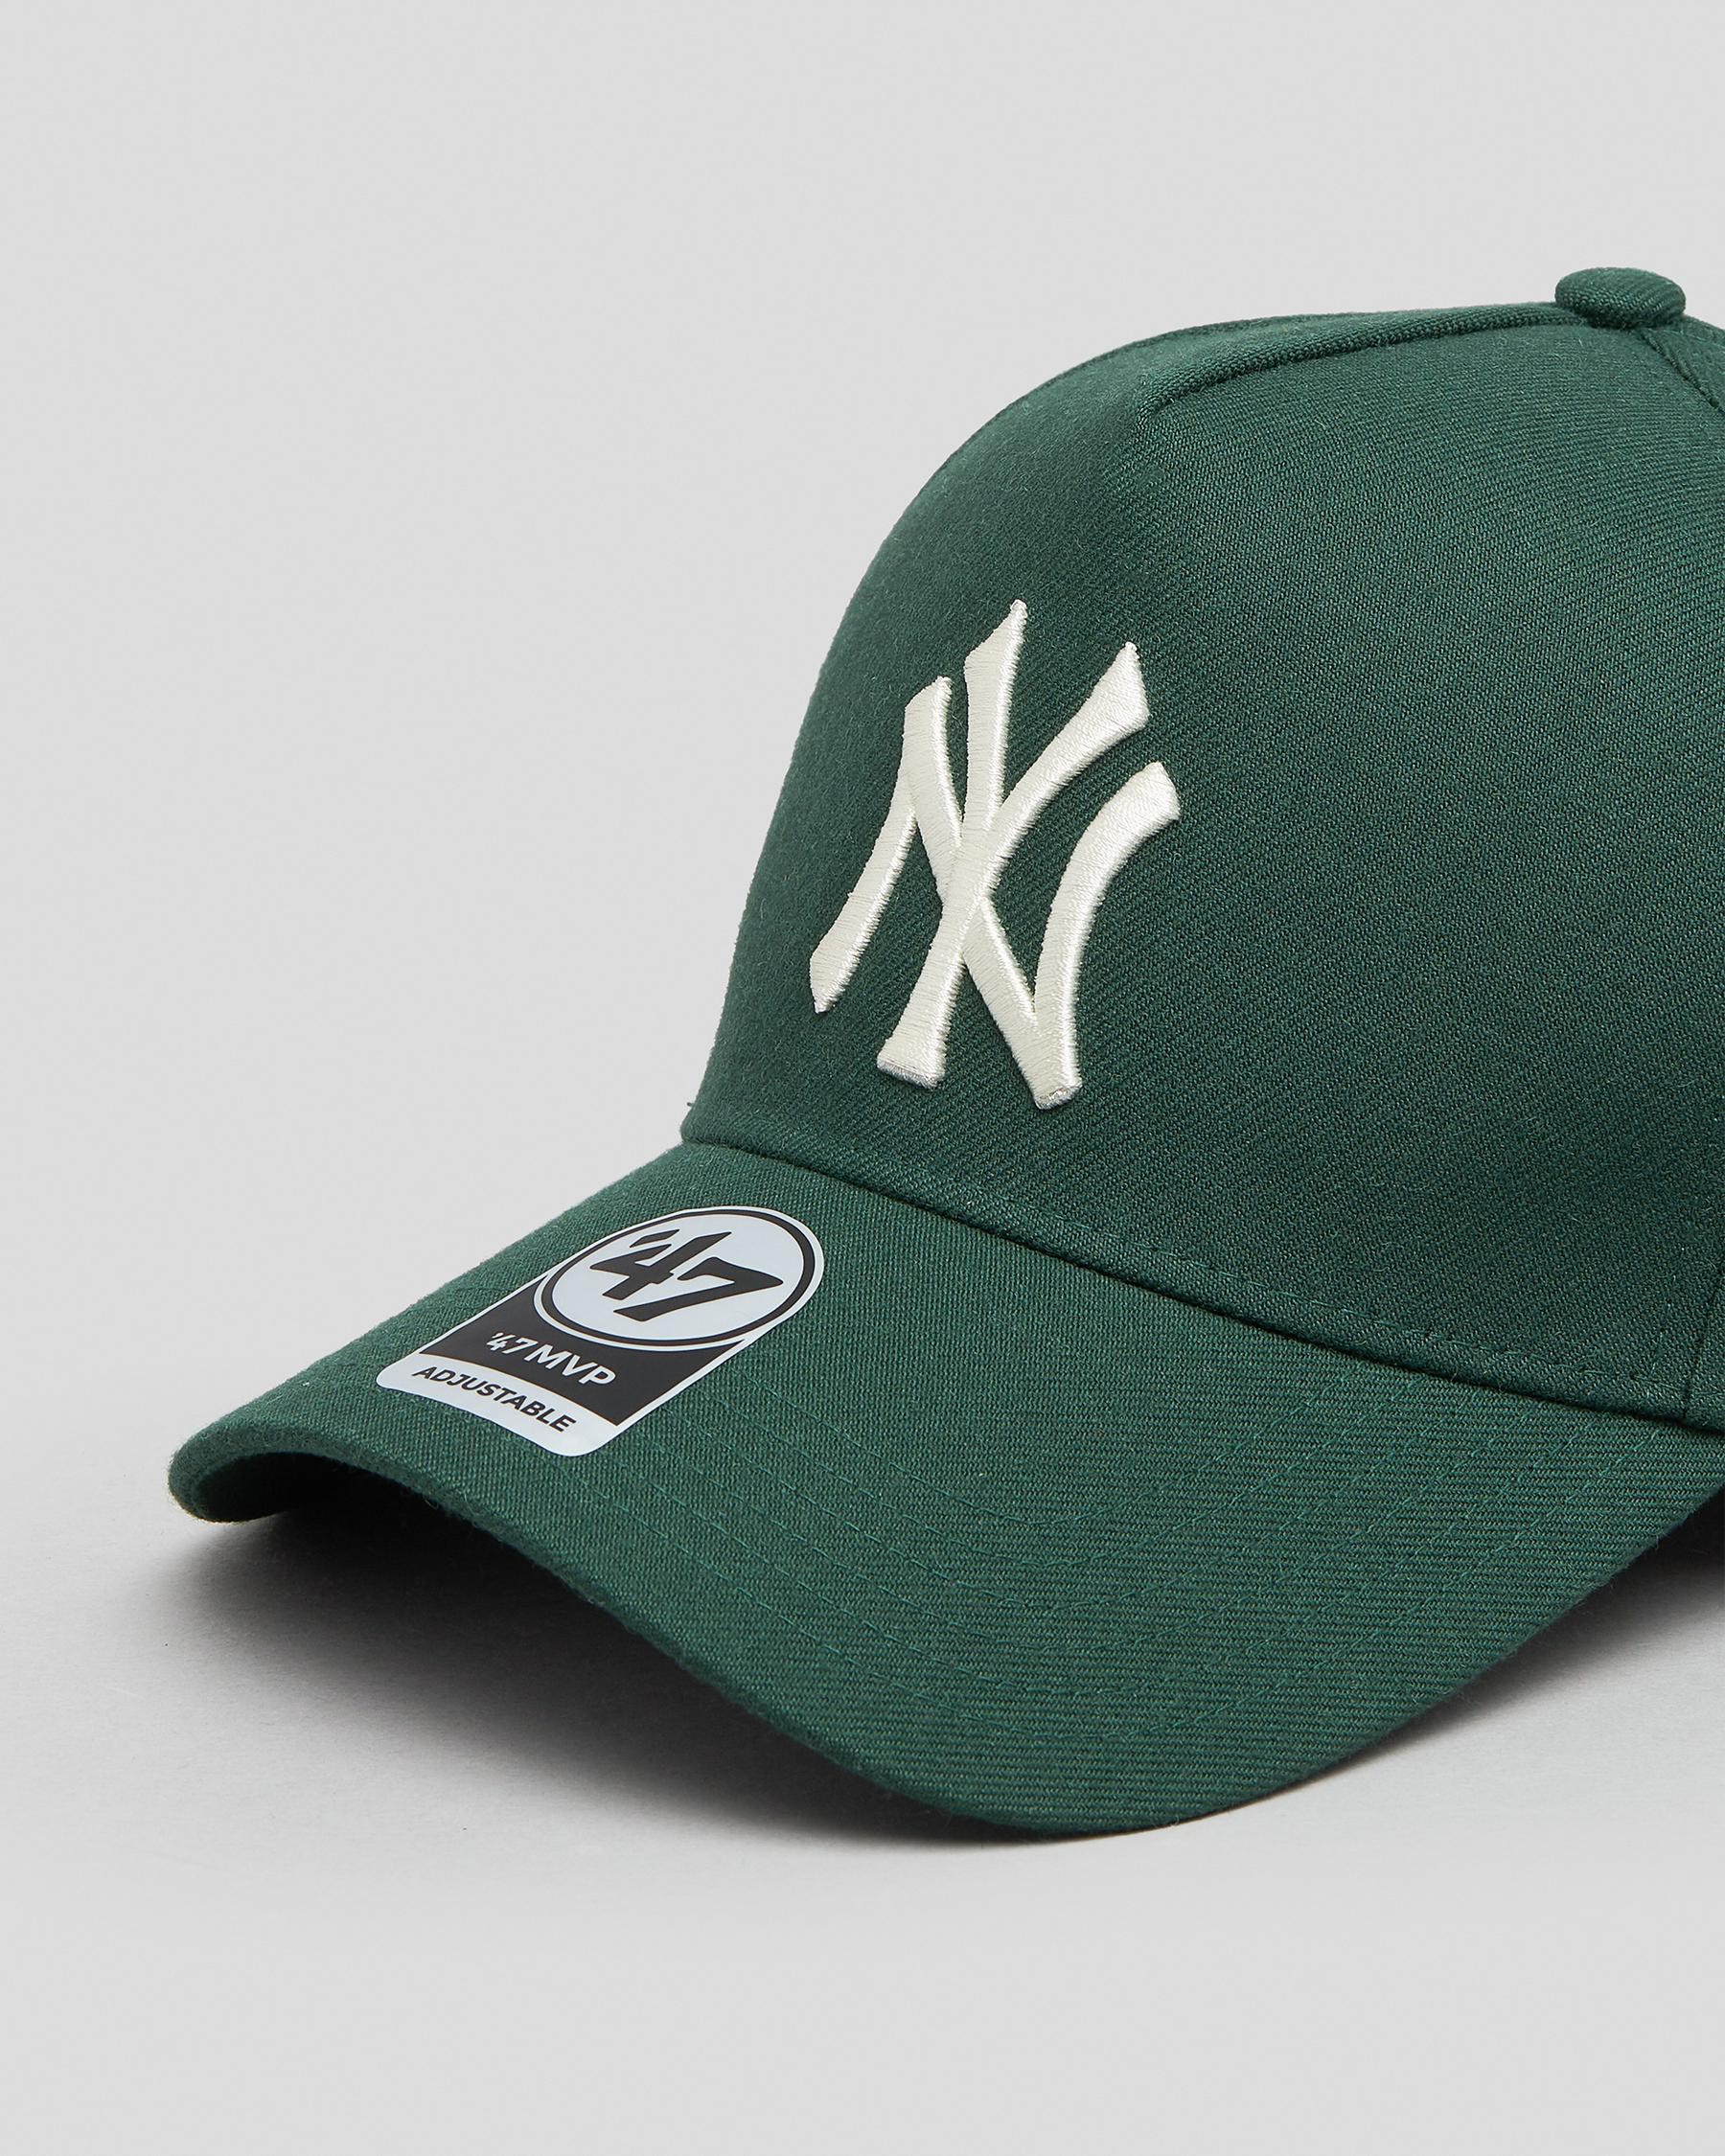 New York Yankees Mvp Dark Green Adjustable - 47 Brand cap